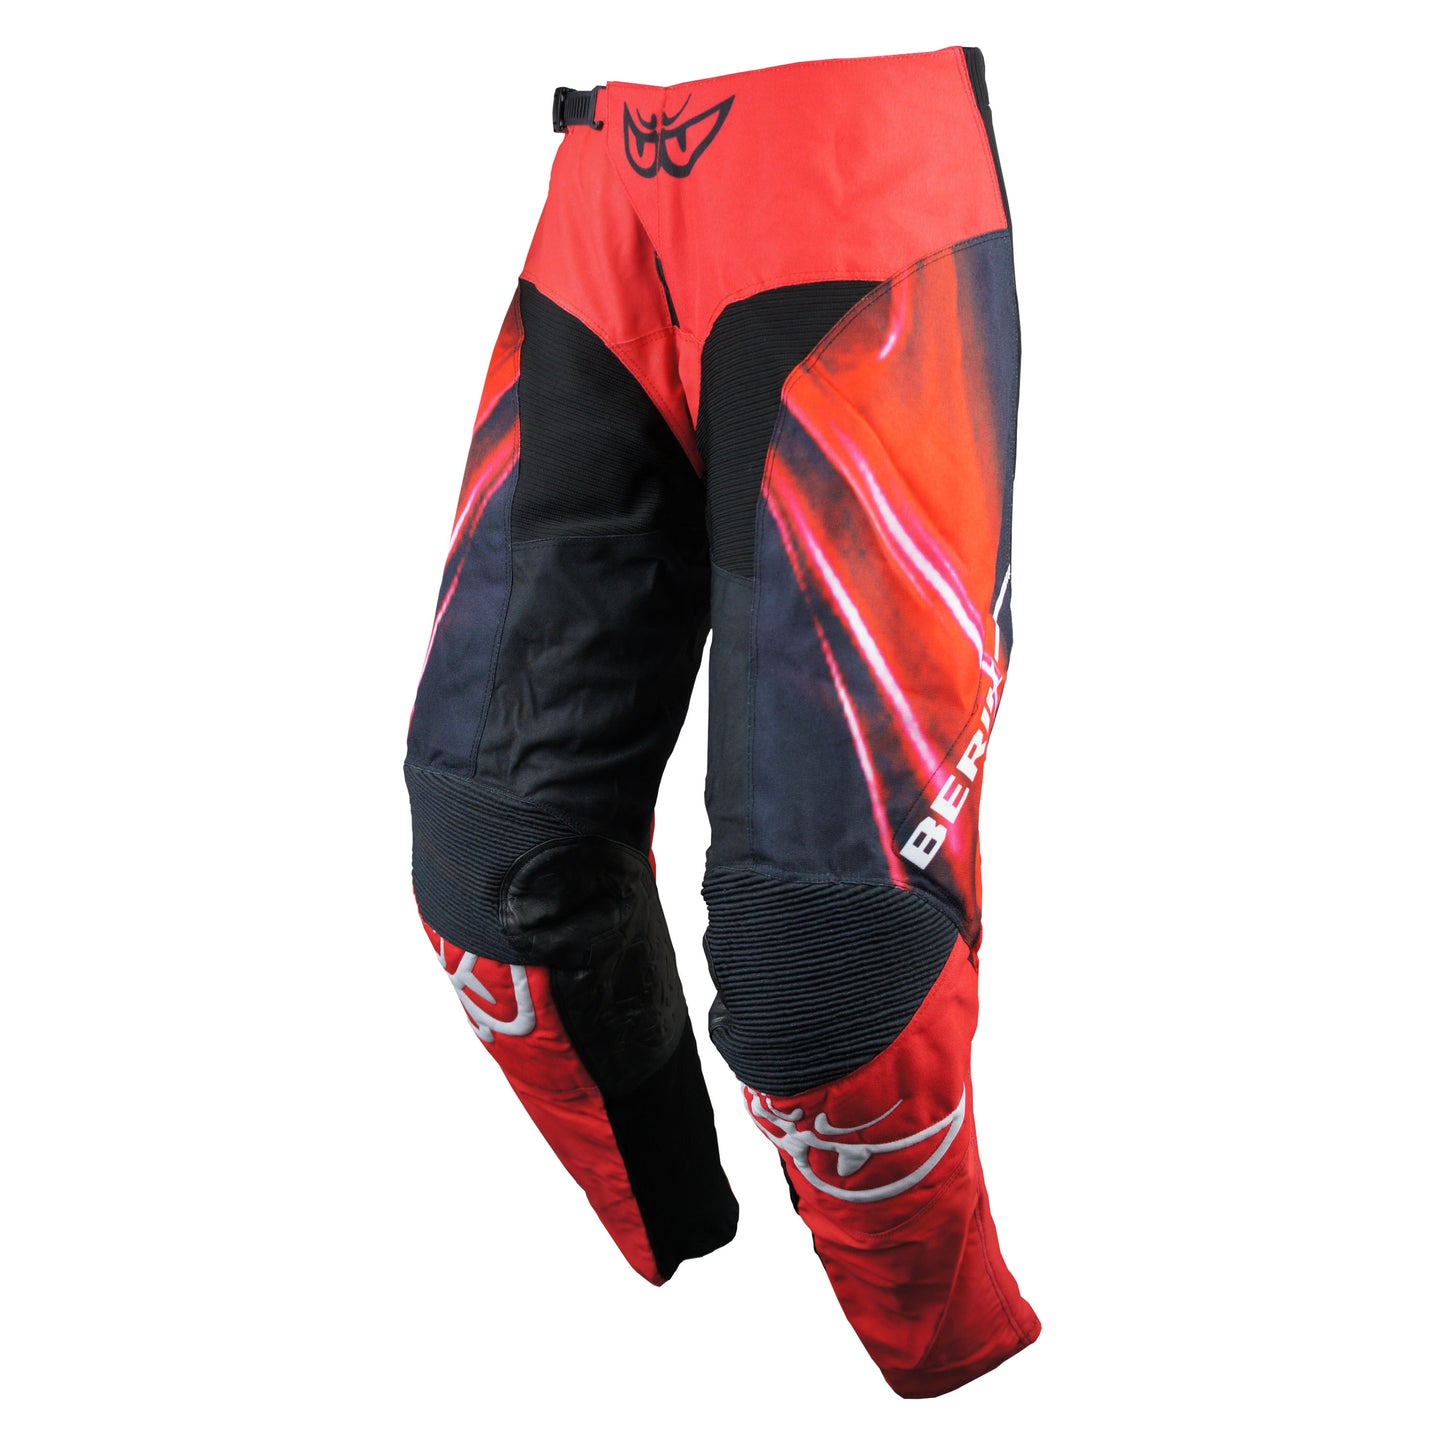 Pre-order sale JP-227309-BK RED BERIK MX pants